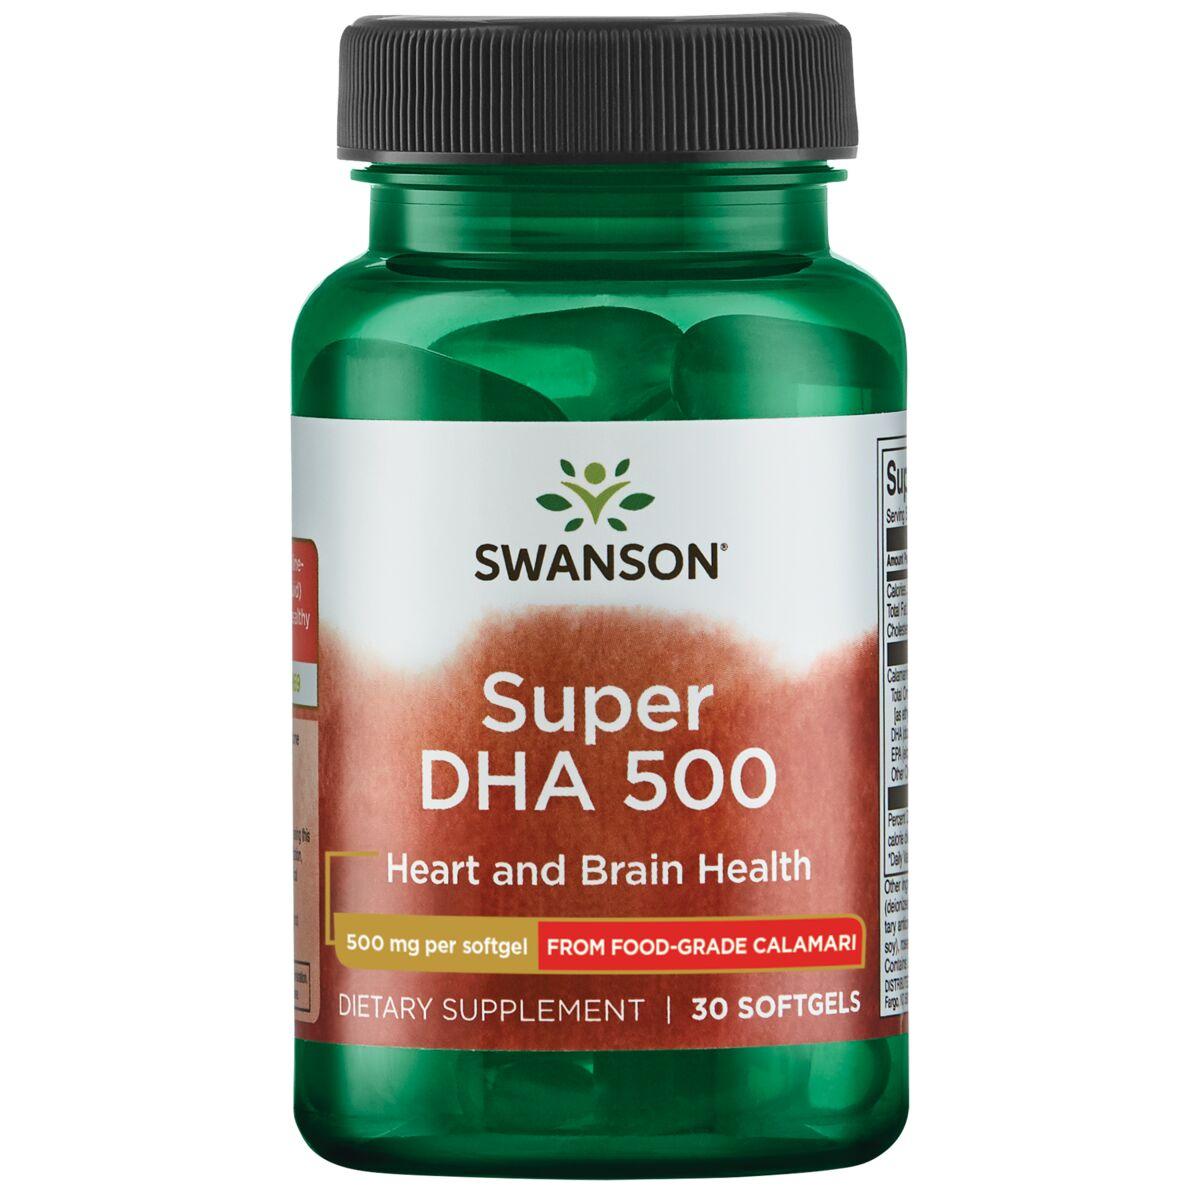 Swanson EFAs Super Dha 500 from Food-Grade Calamari Supplement Vitamin | 500 mg | 30 Soft Gels